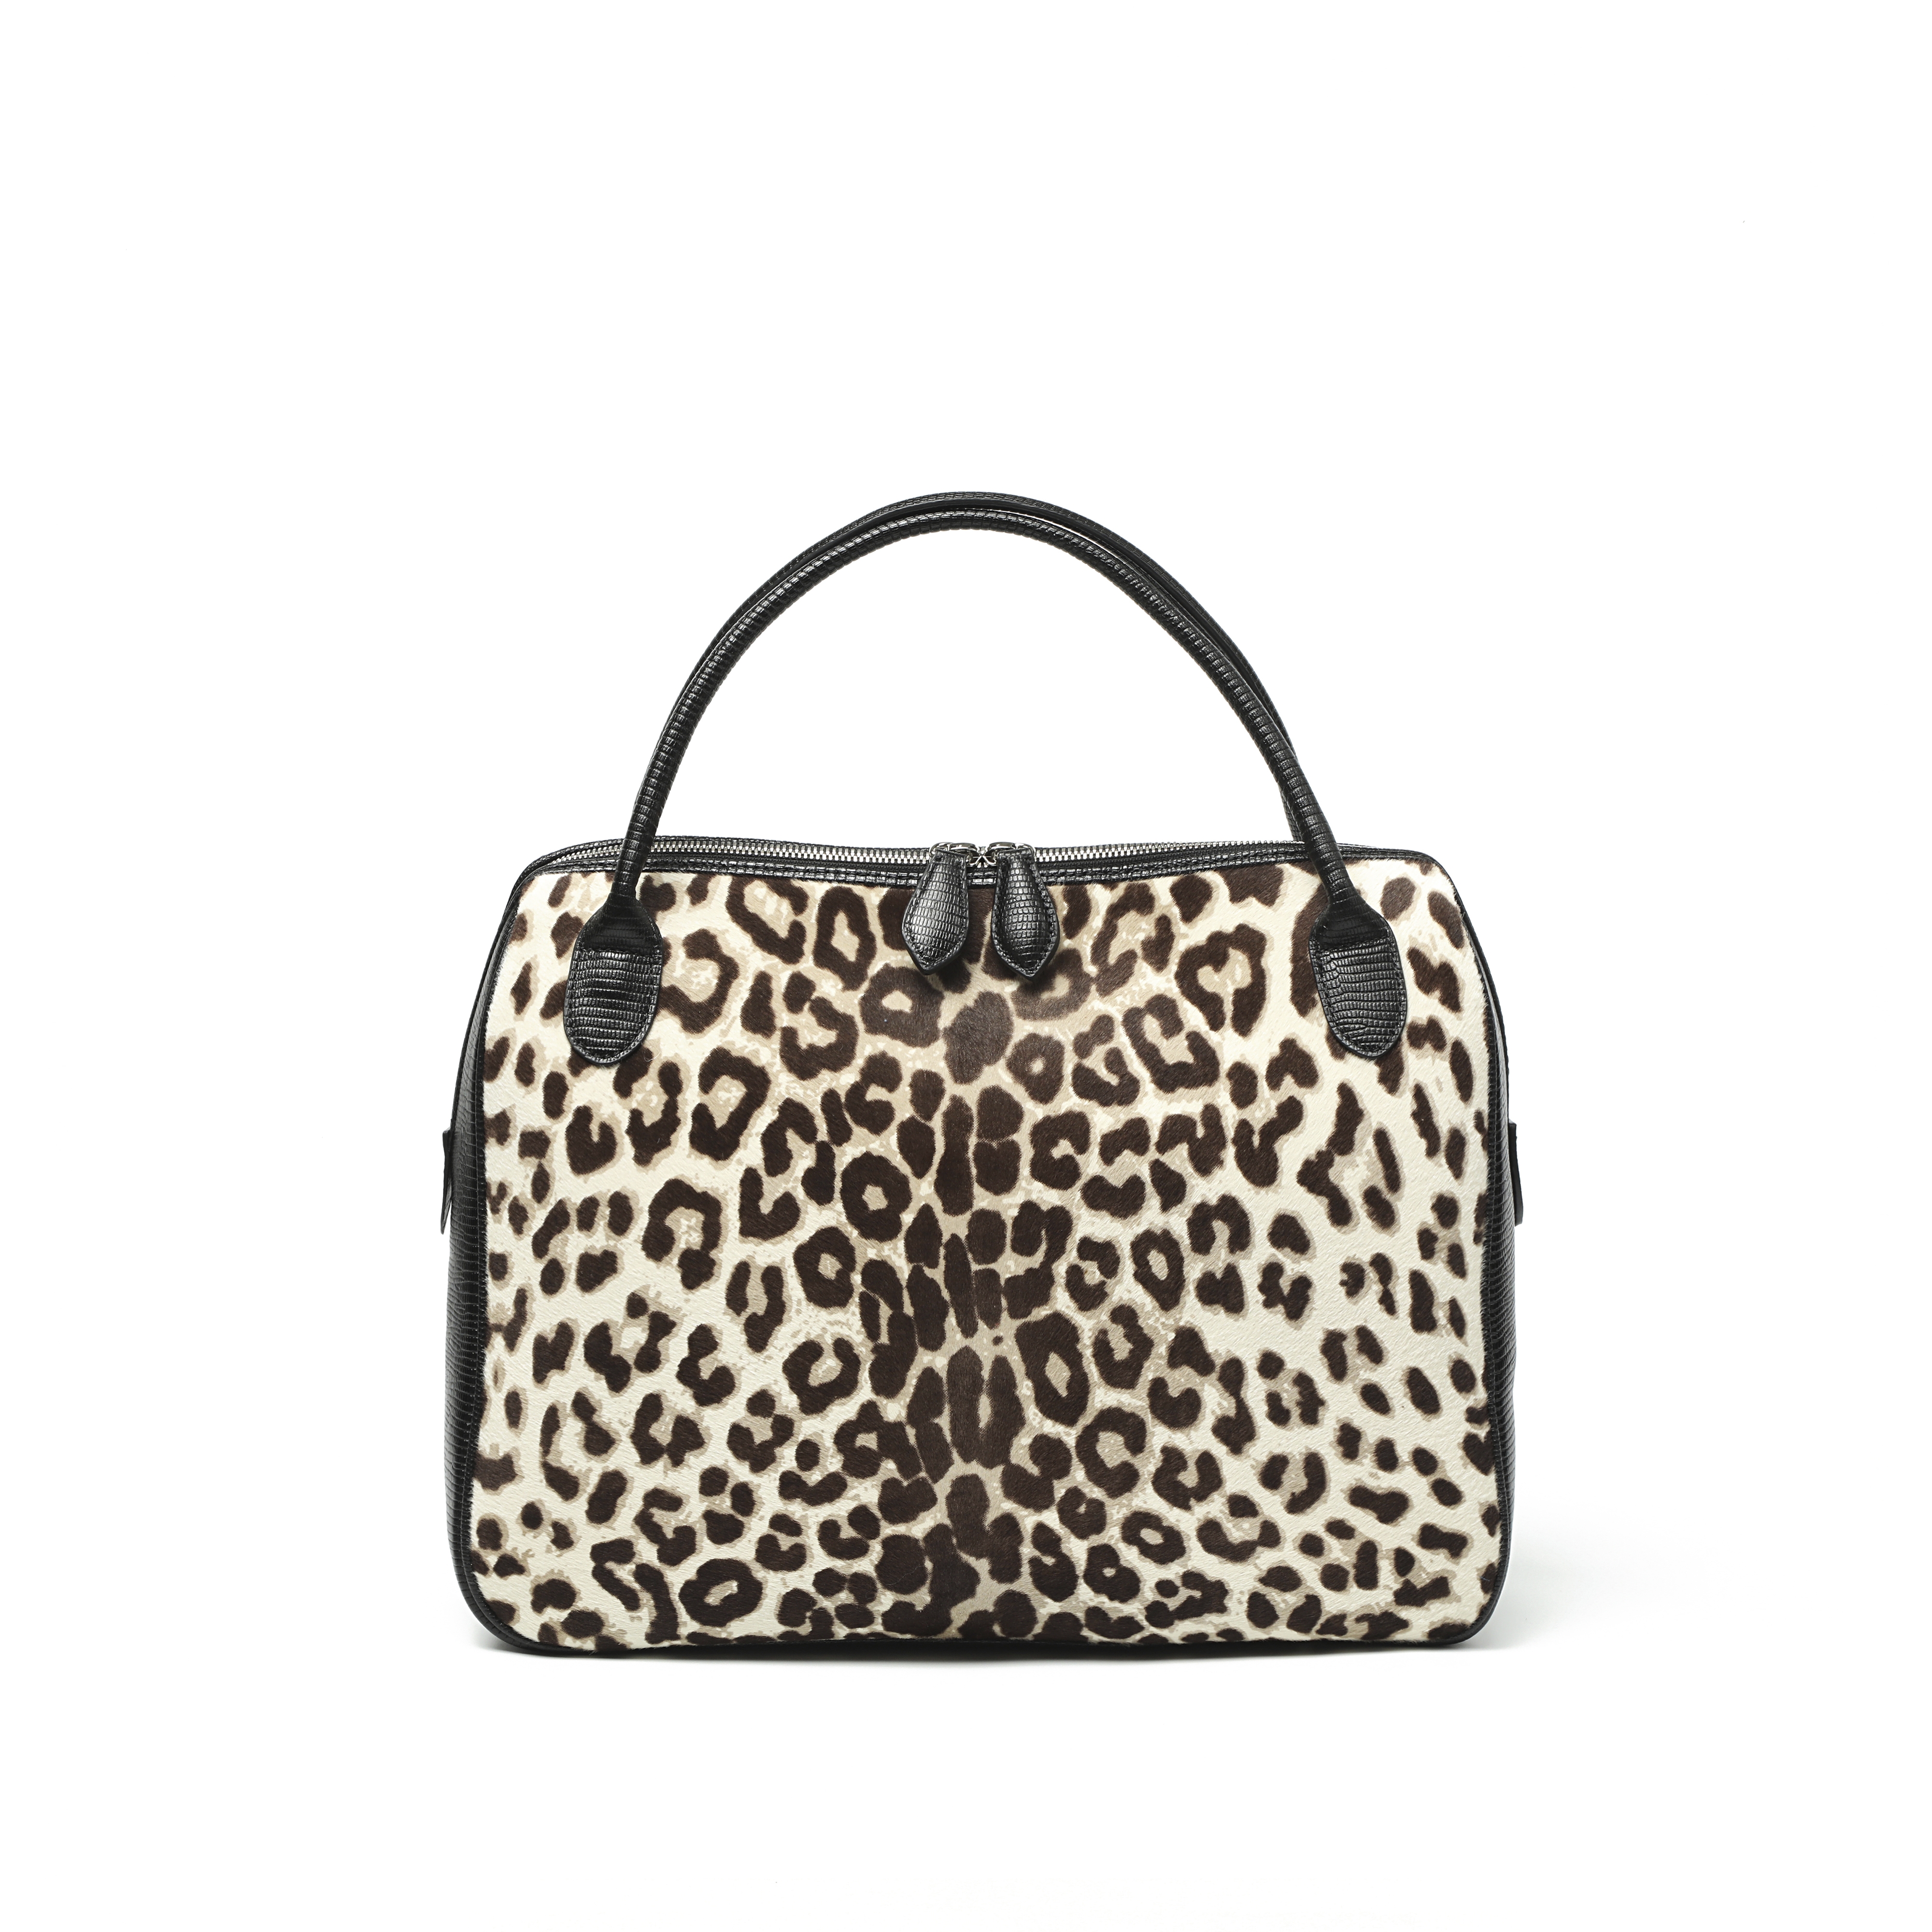 Gramercy bag _ Leopard Black _ S